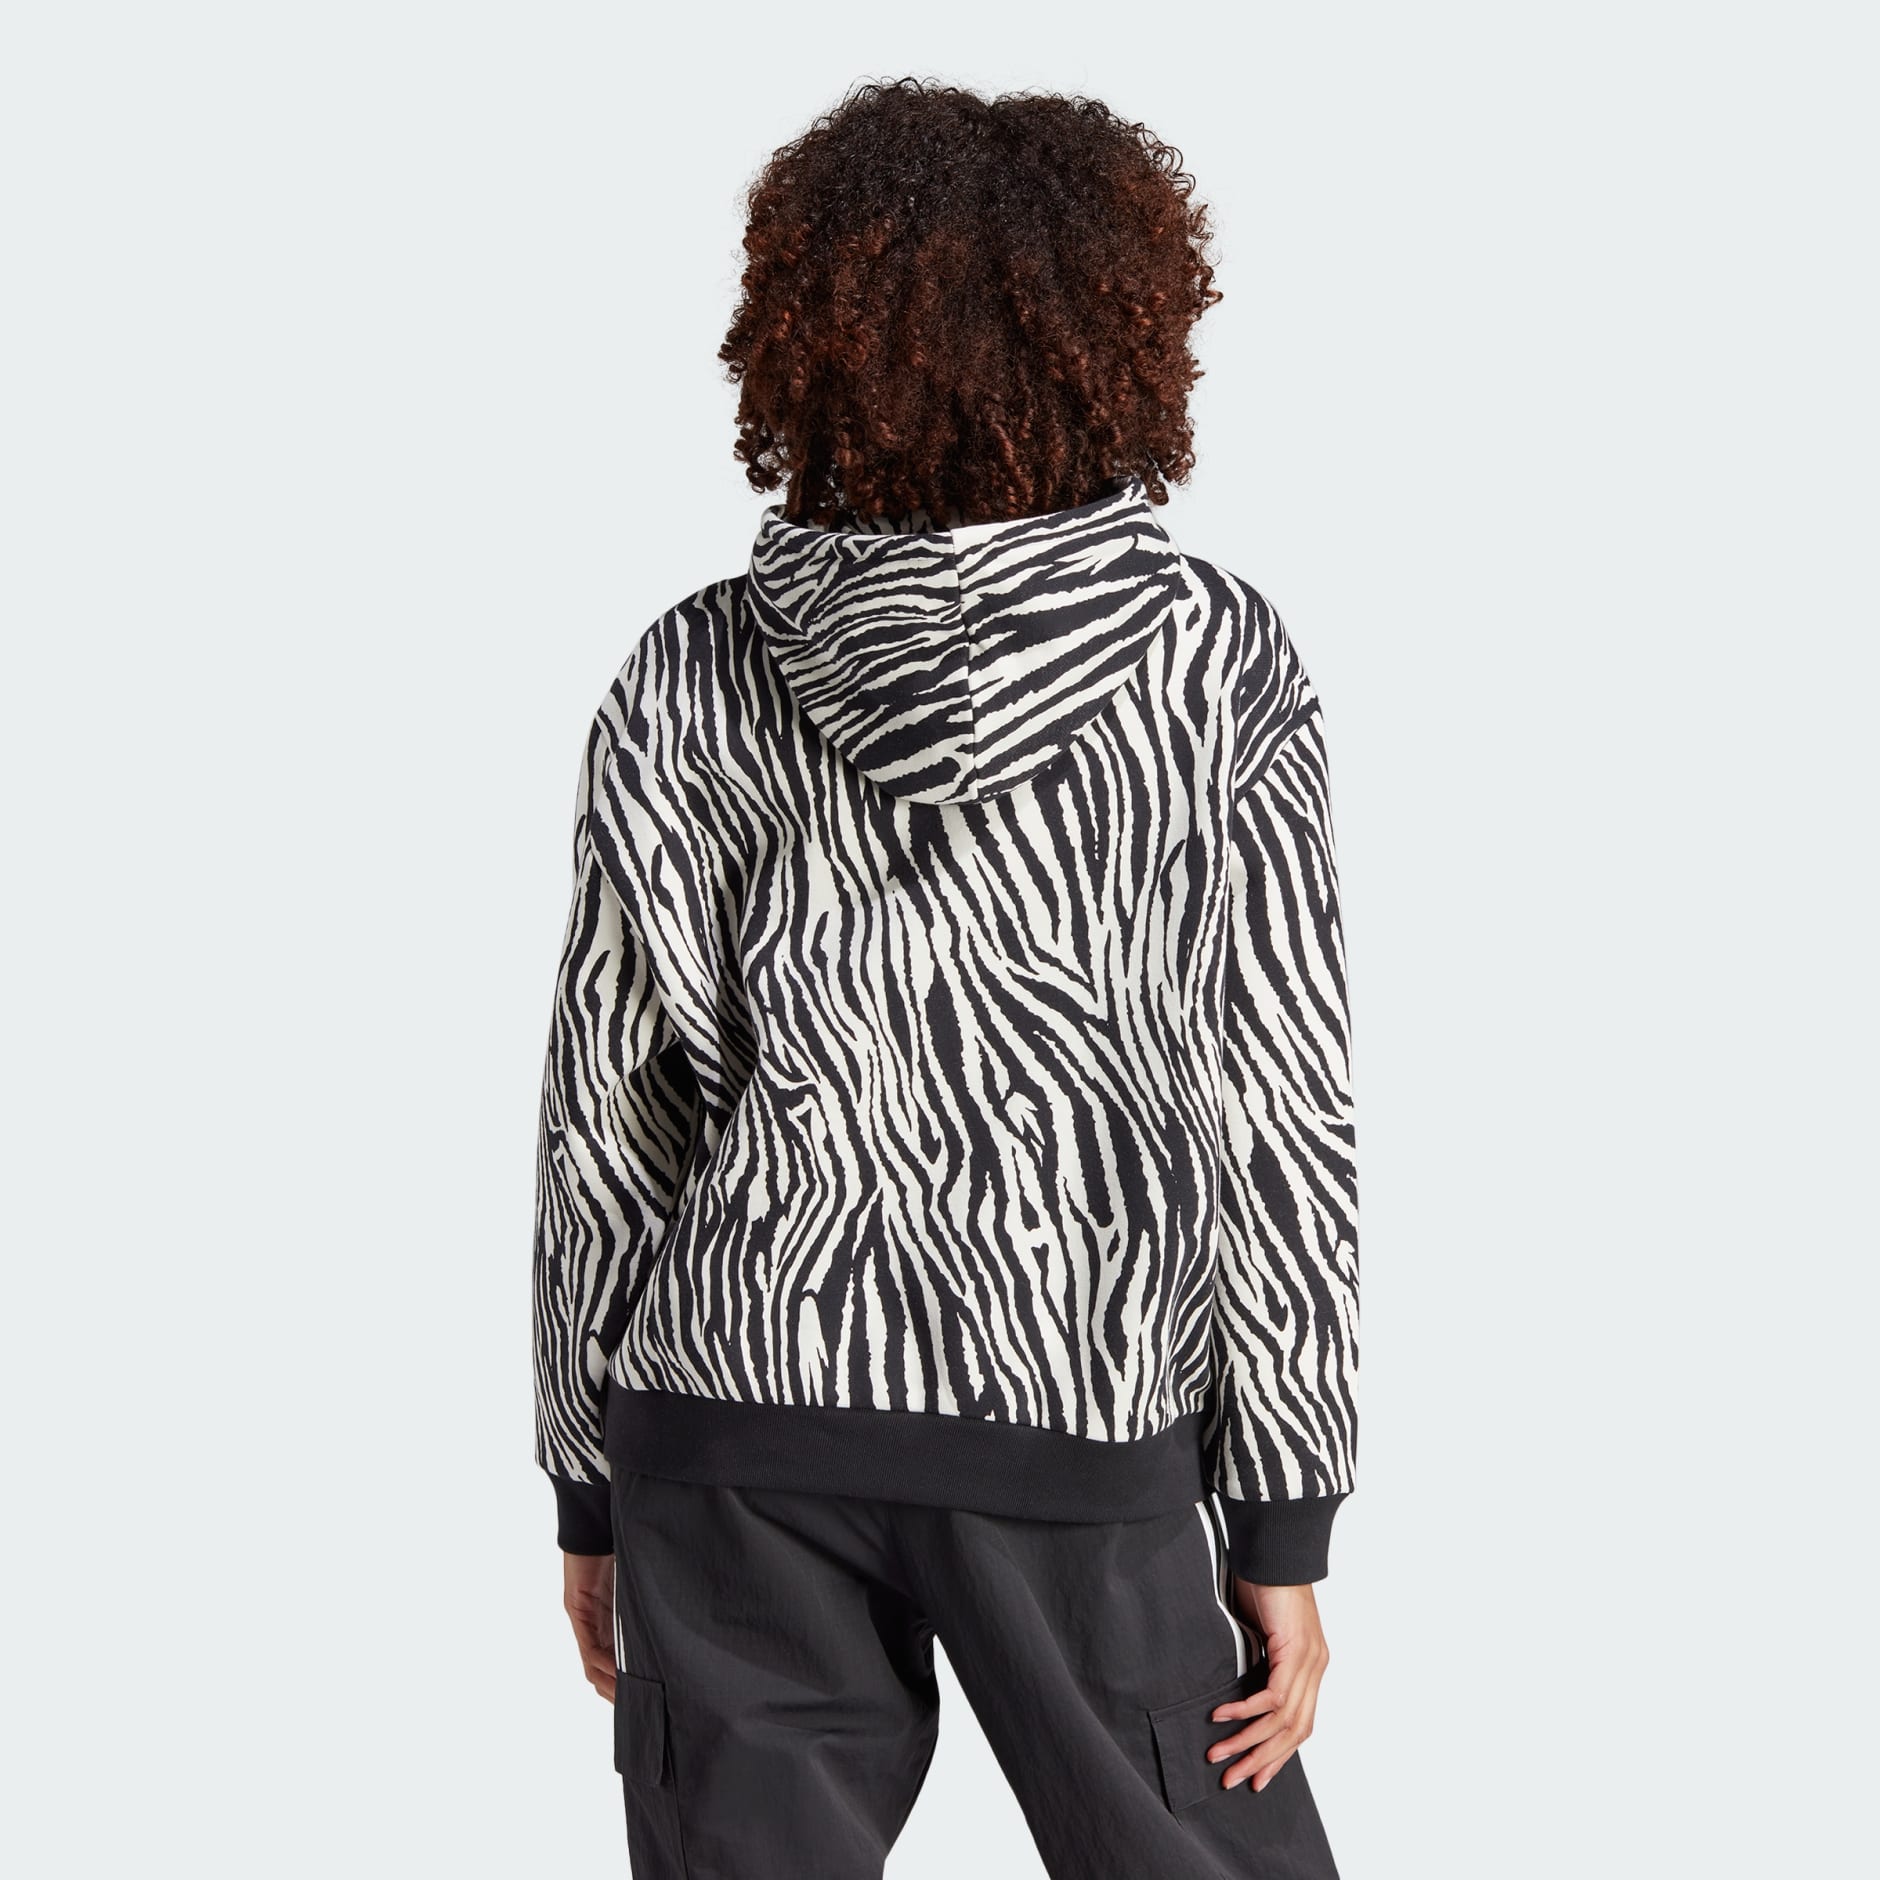 Hoodie Print KE Essentials Zebra adidas | adidas - Allover White Animal